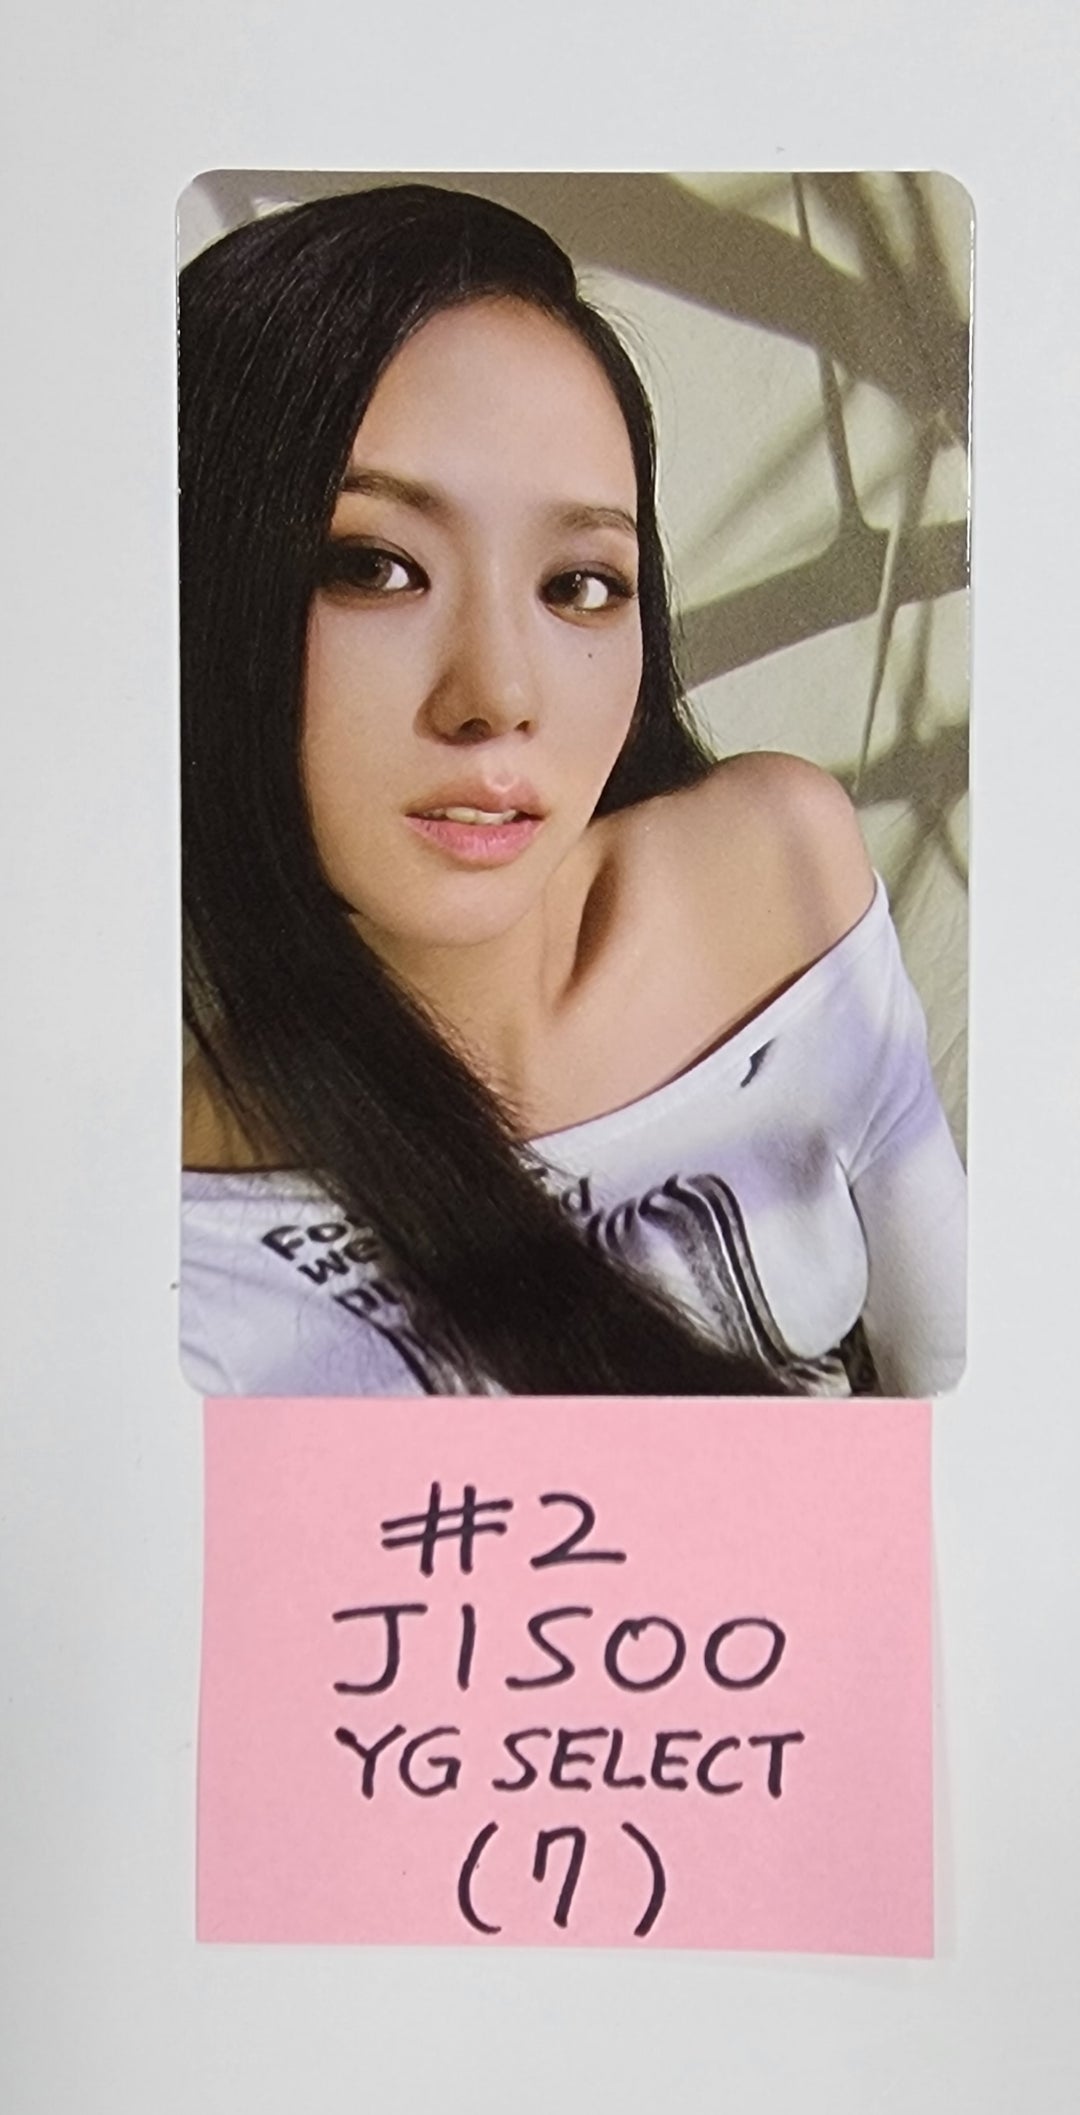 JISOO (Of Black Pink) "ME" - YG Select Pre-Order Benefit Photocard Round 2